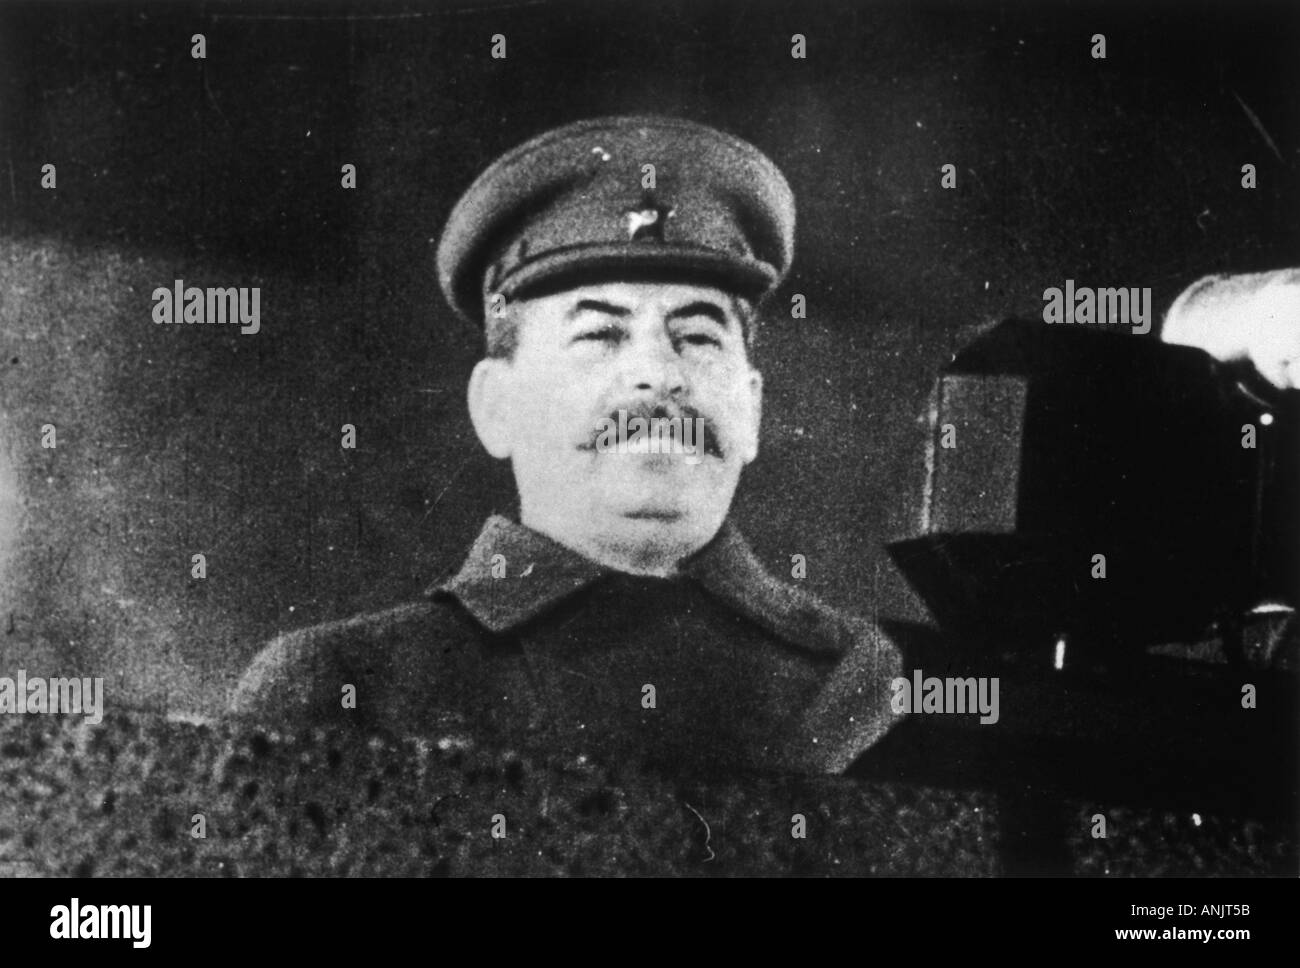 Stalin al Rally Foto Stock